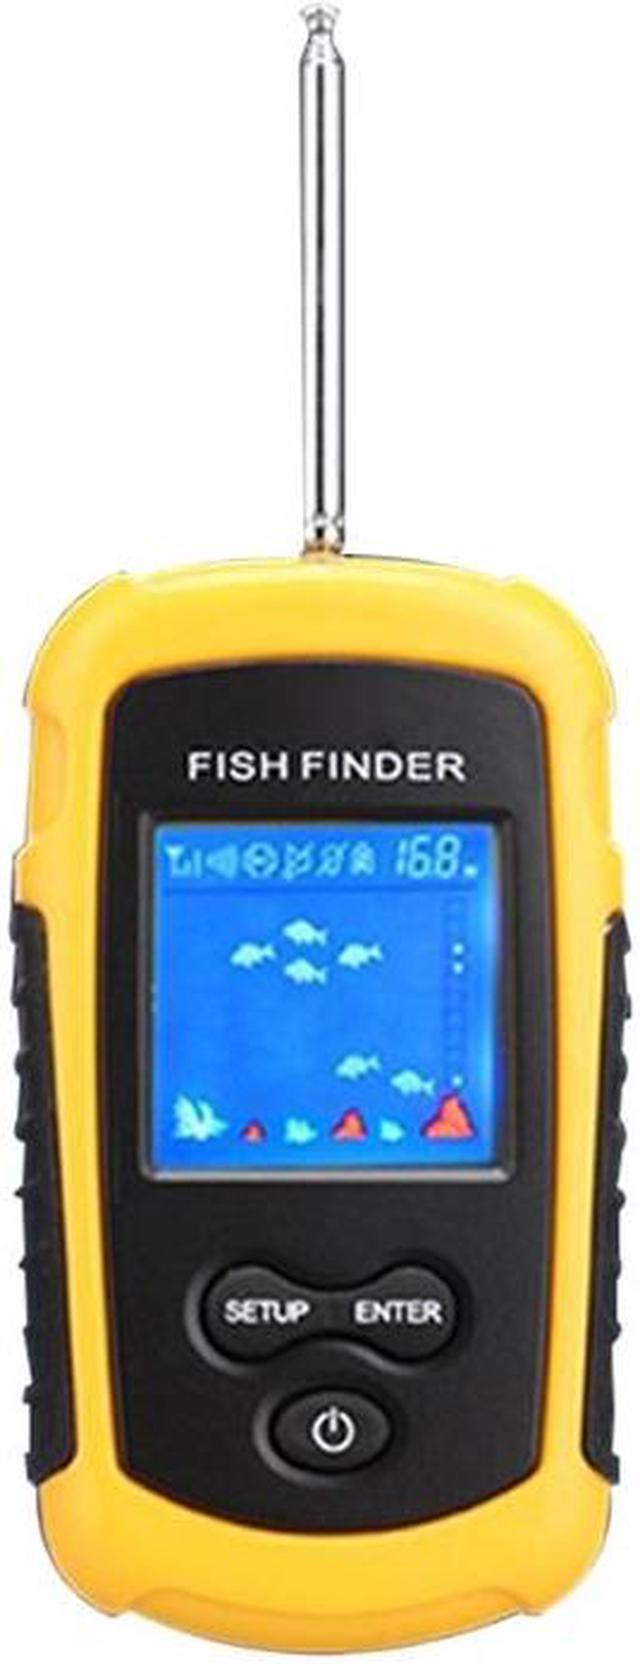 Fish Finder Sonar Modules for Boats, Fishing Sonar